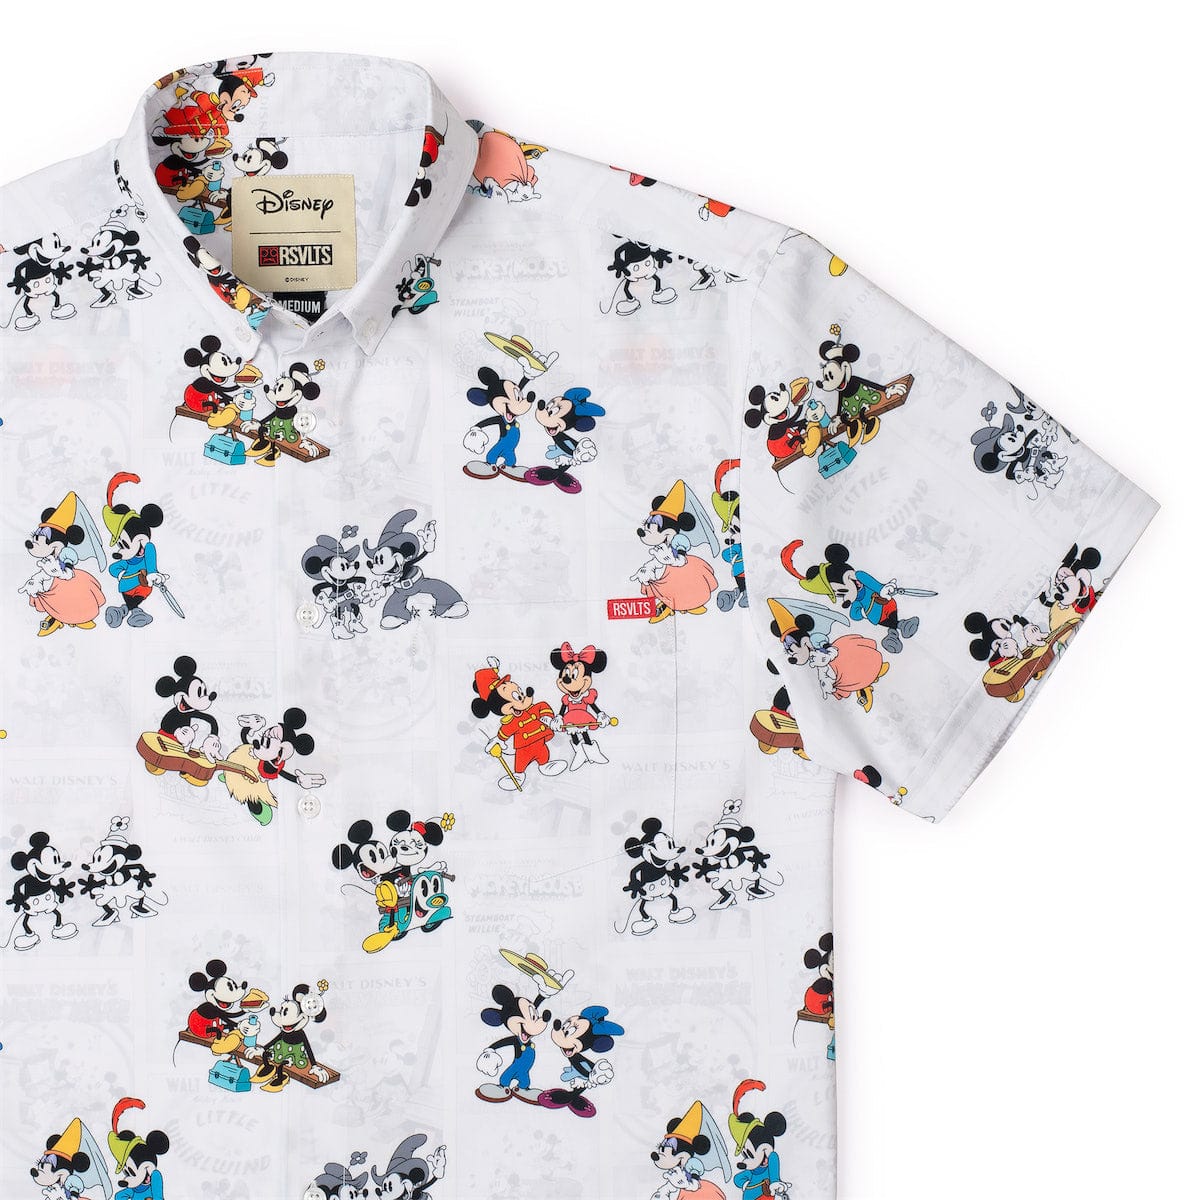 Disney "Since 1928" – KUNUFLEX Short Sleeve Shirt